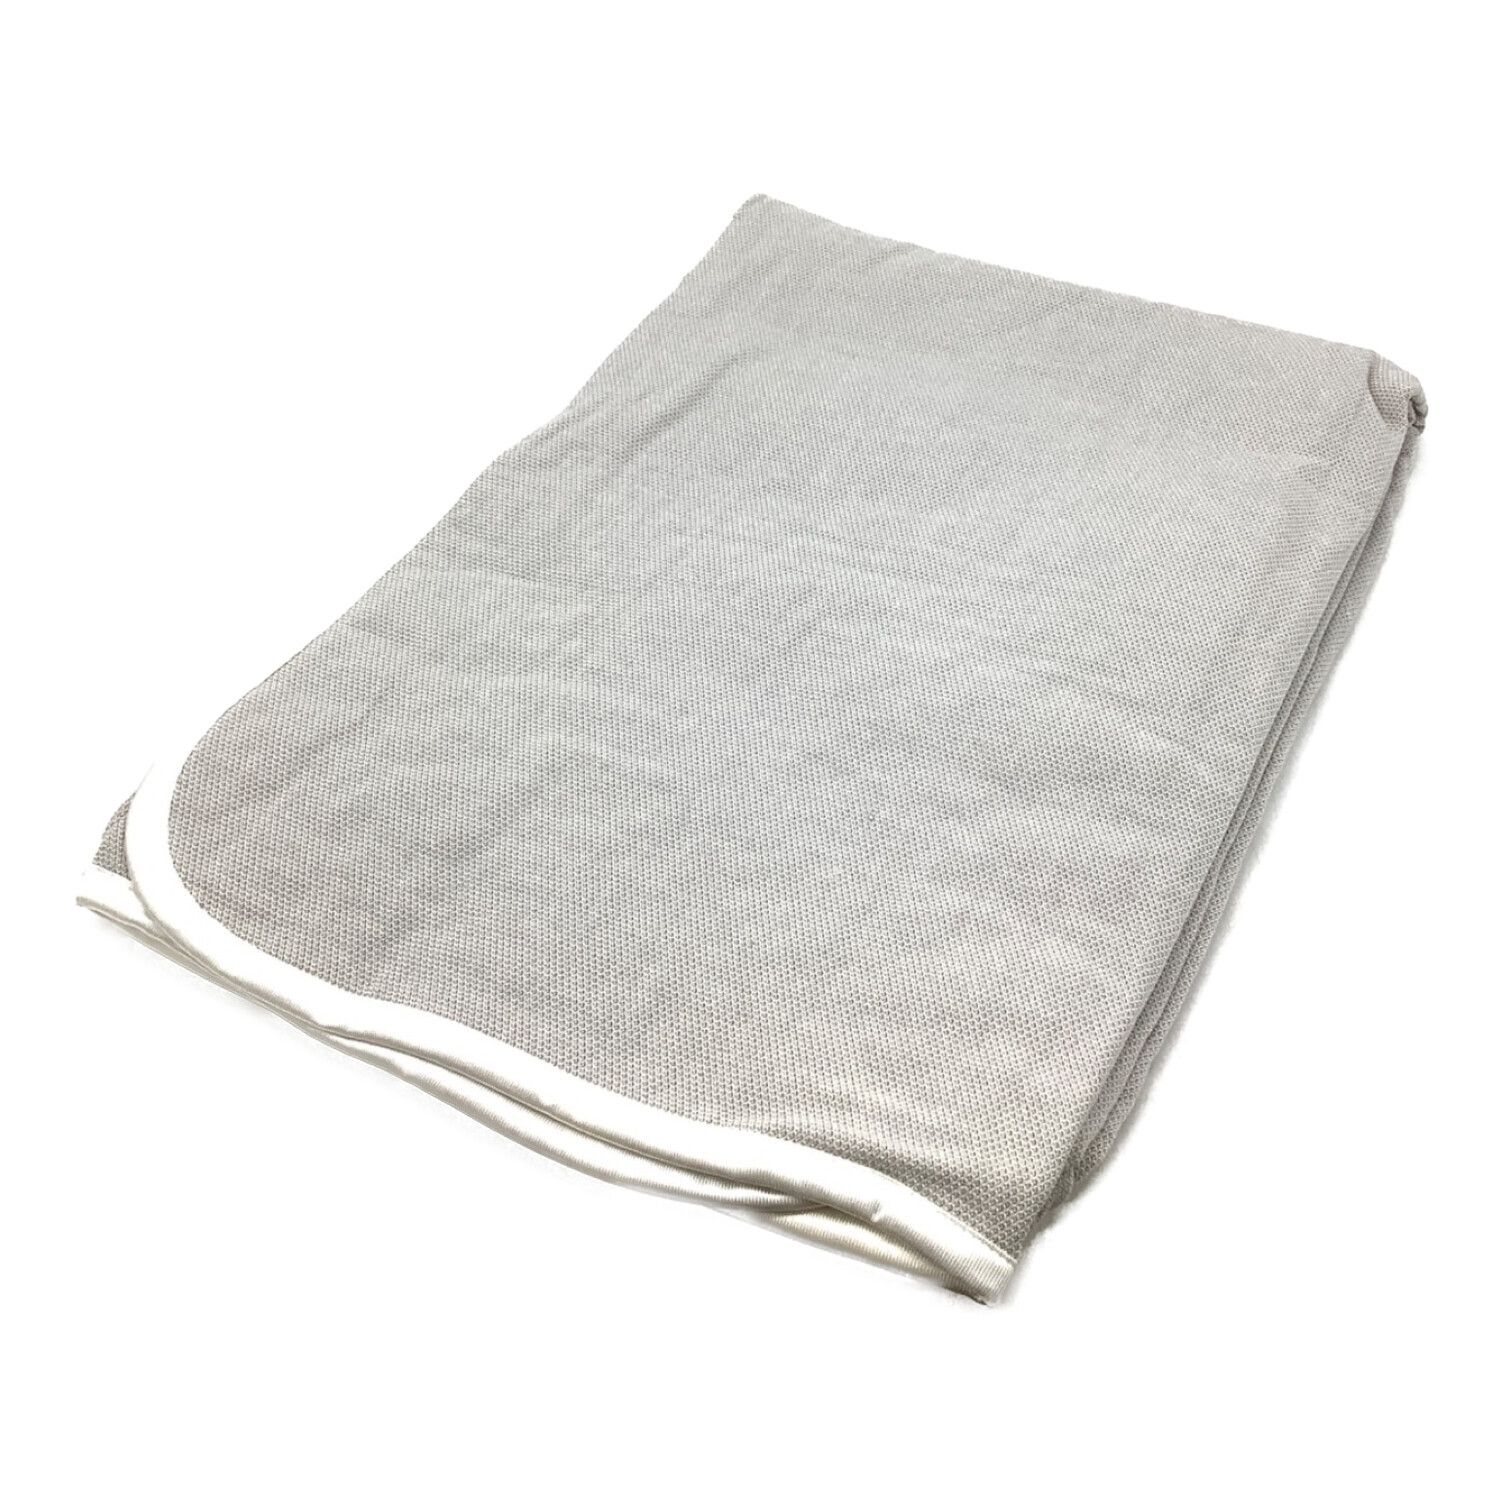 POLA (ポーラ化粧品) ハニカム織りパッドシーツ シングル(幅100×長さ